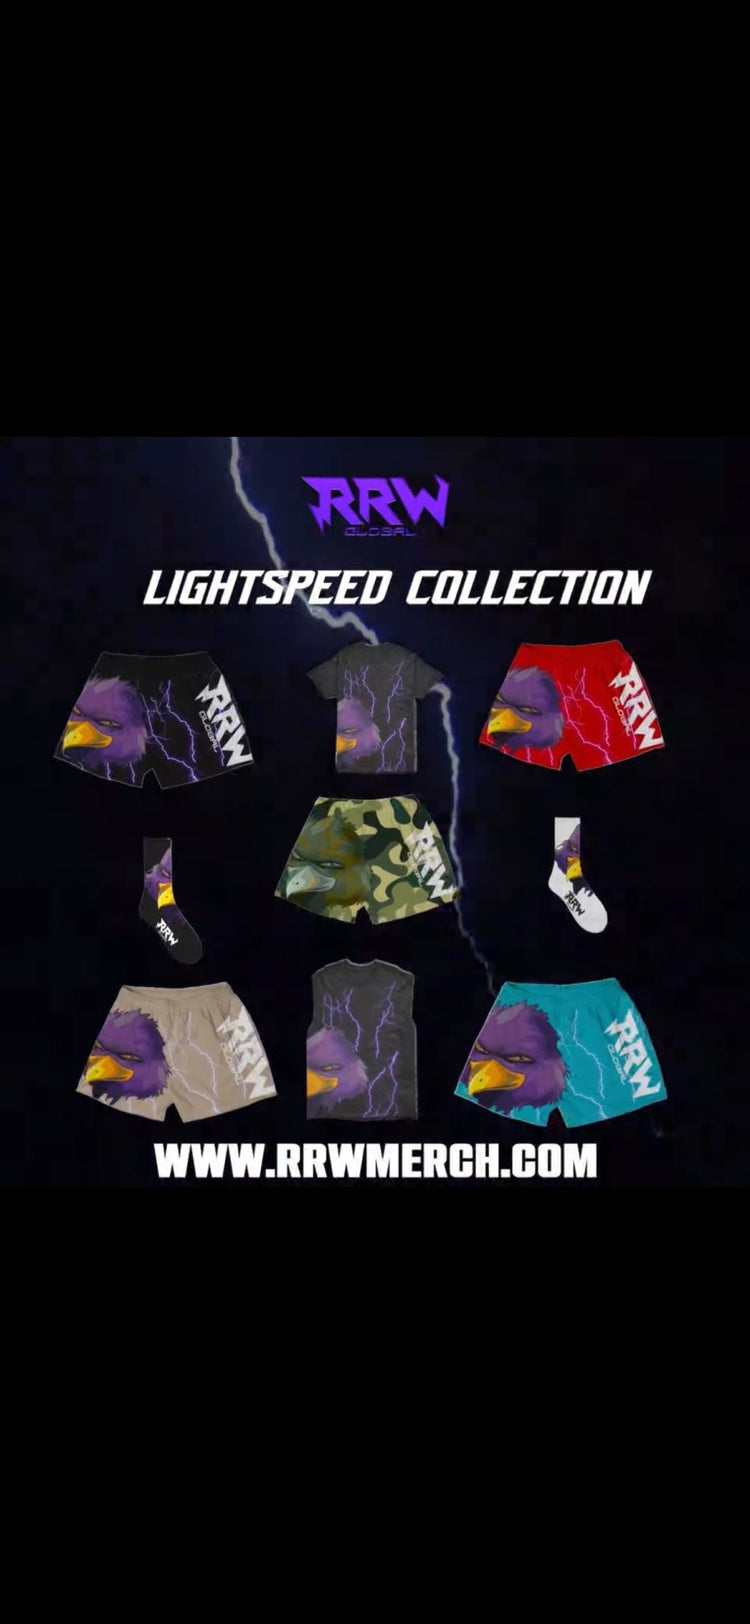 Lightspeed Collection